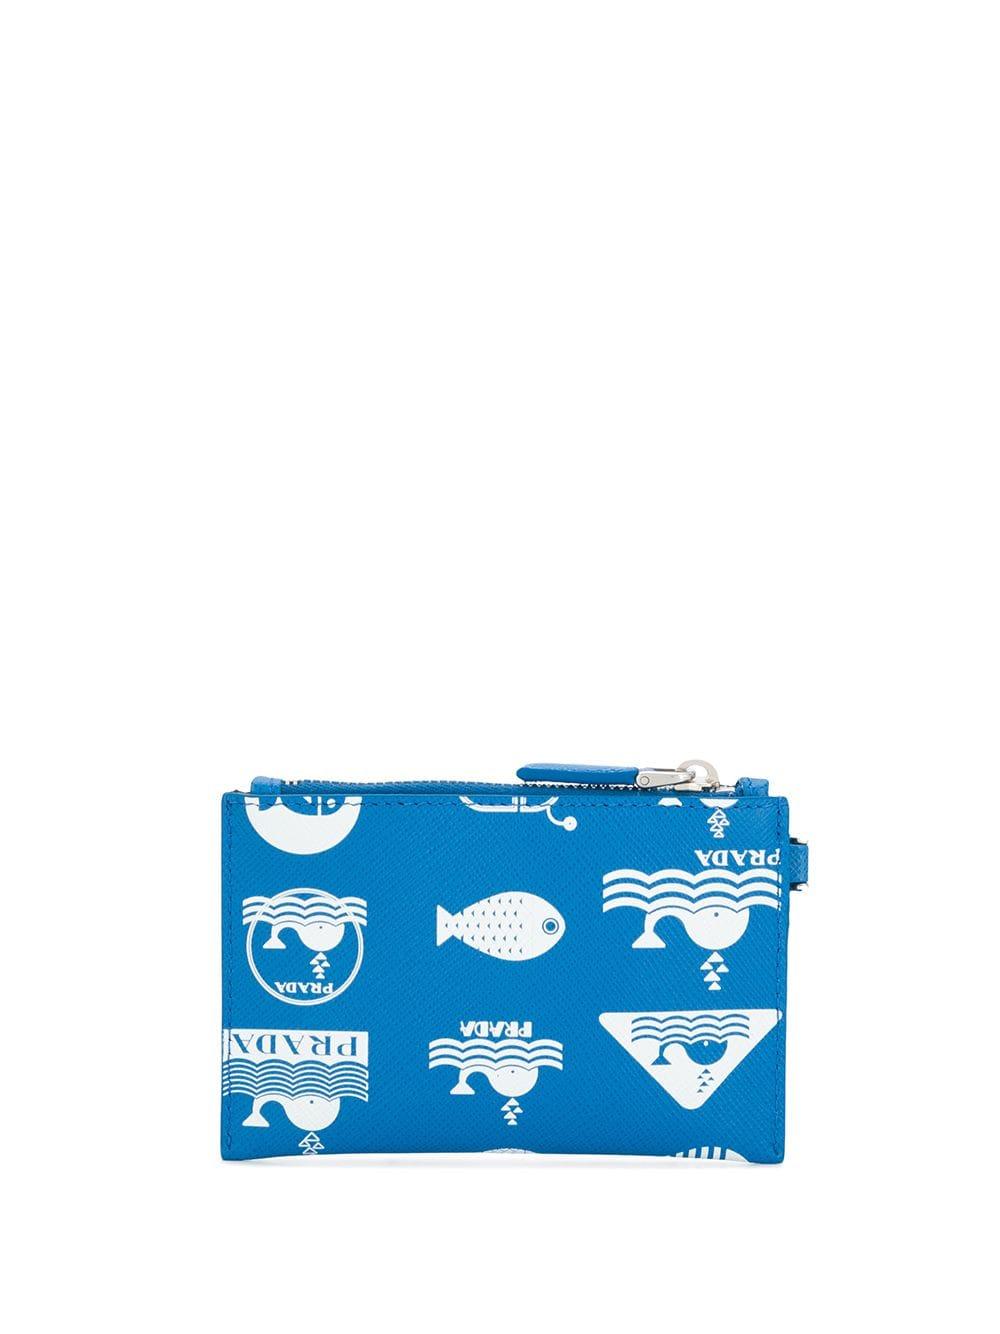 prada whale wallet